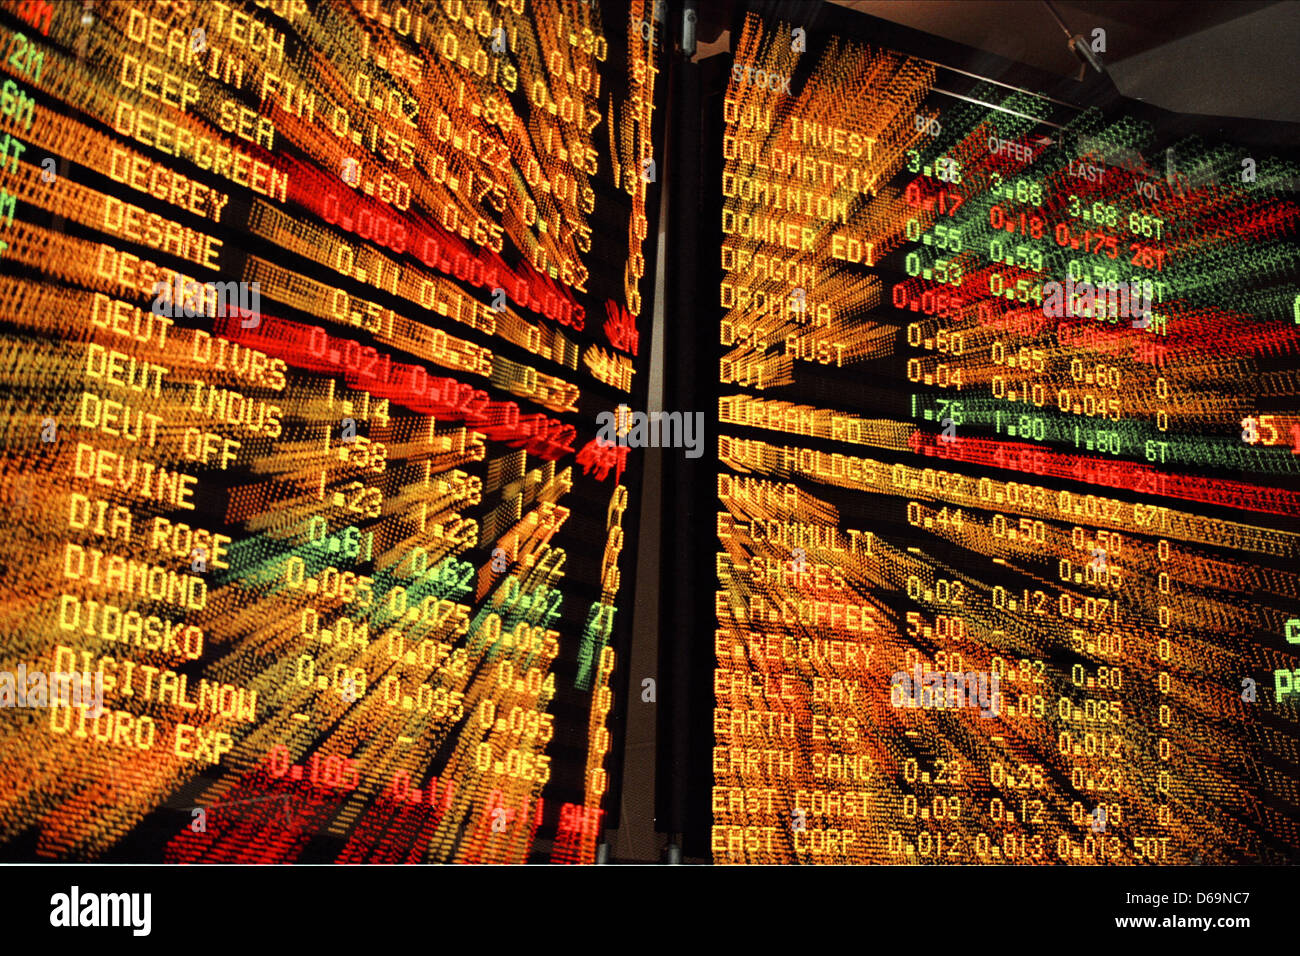 stock exchange,scoreboard,stock price,blackboard Stock Photo